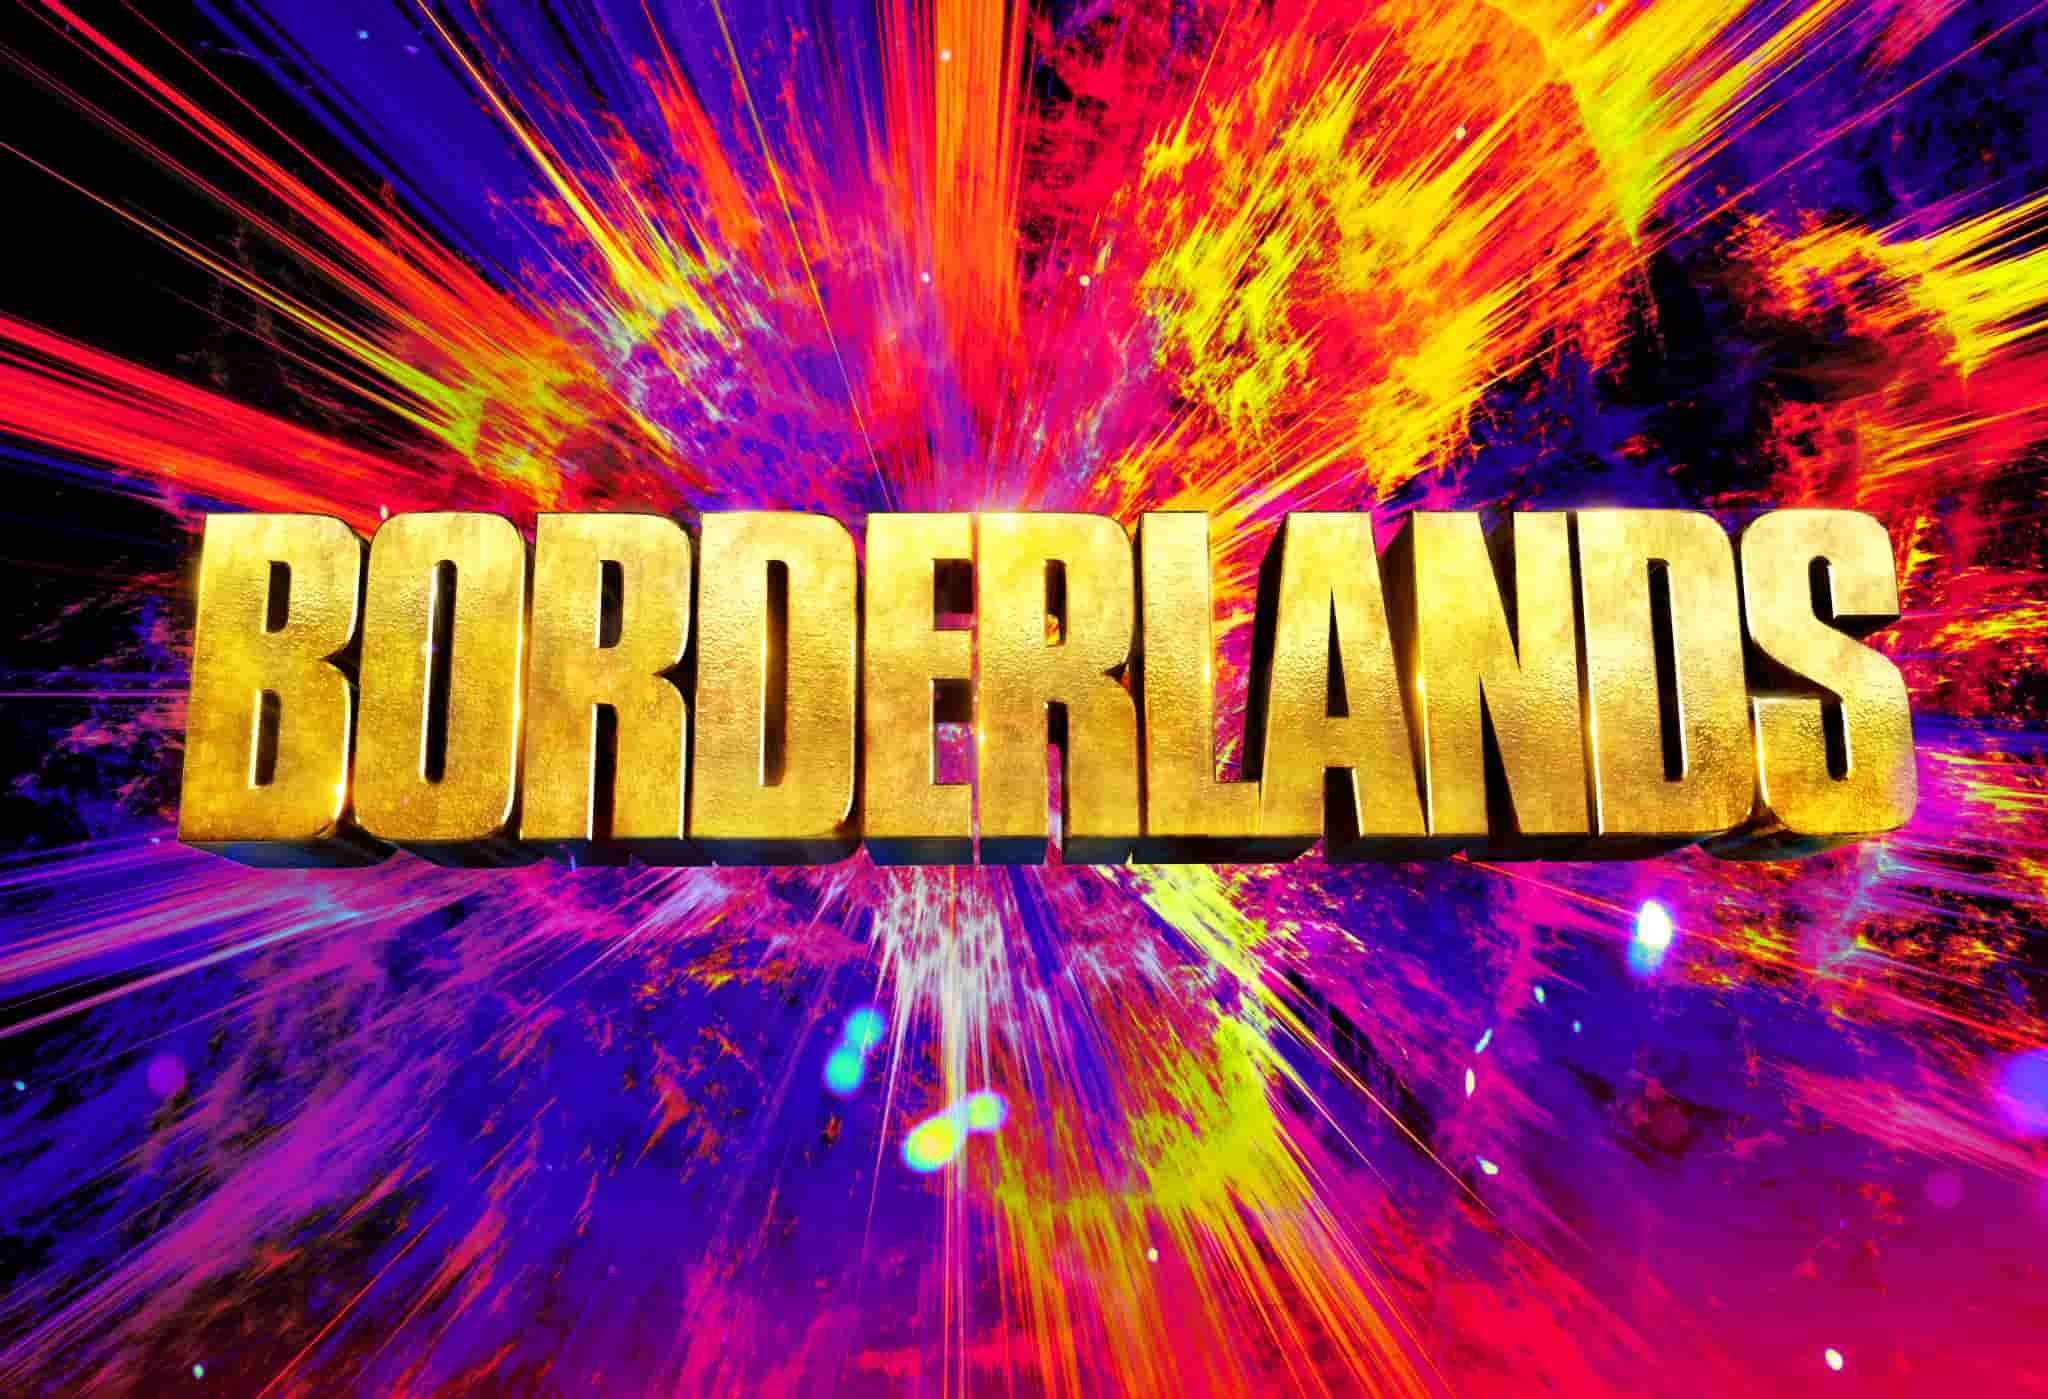 Borderlands film